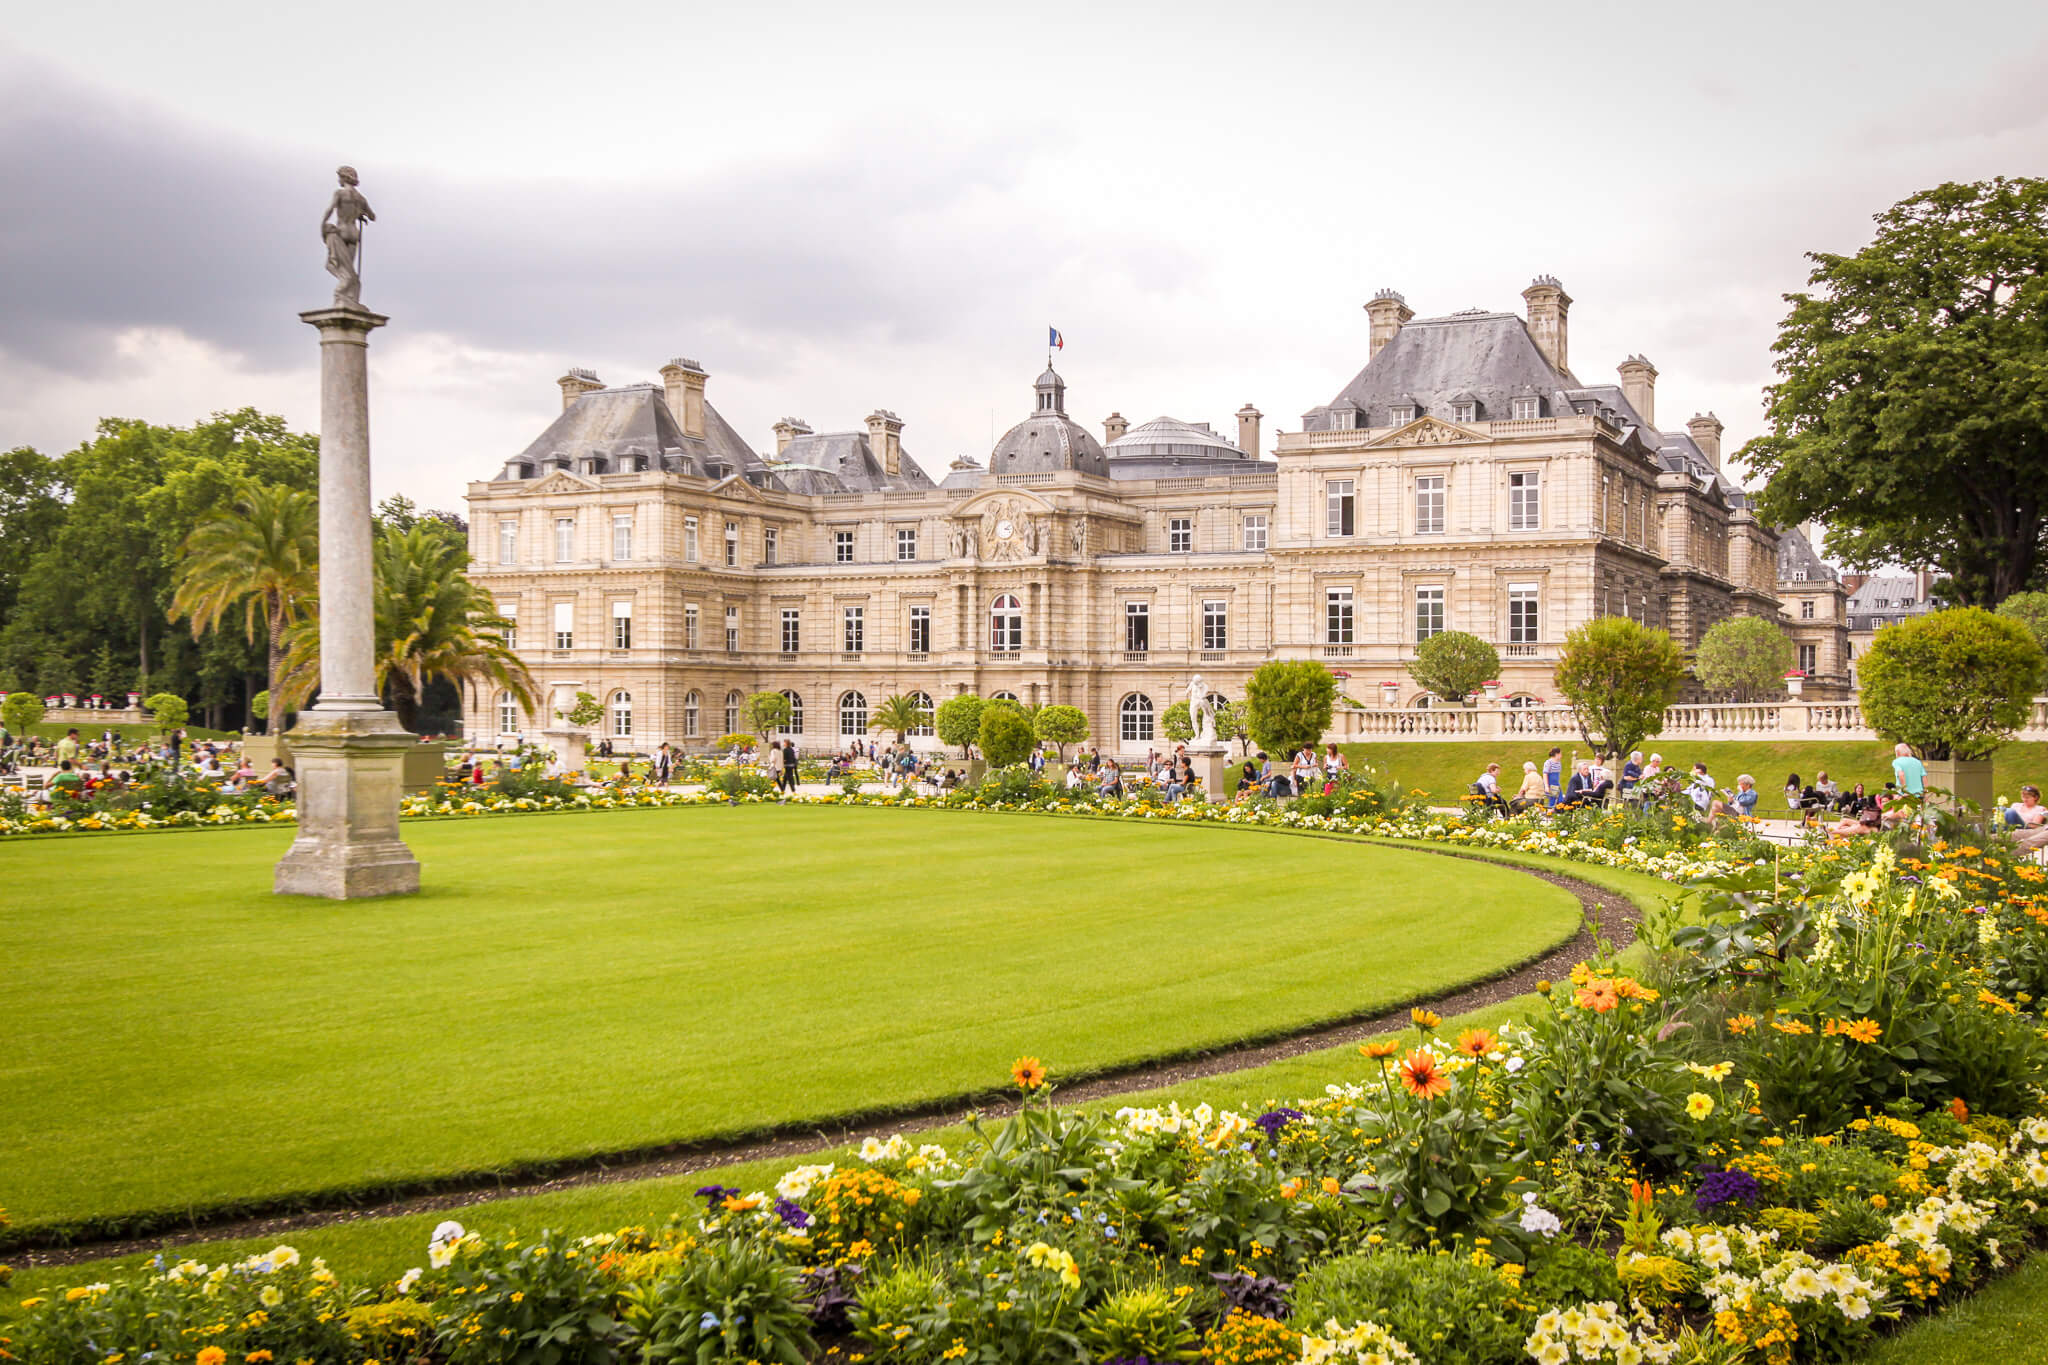 Luxembourg Gardens in Paris